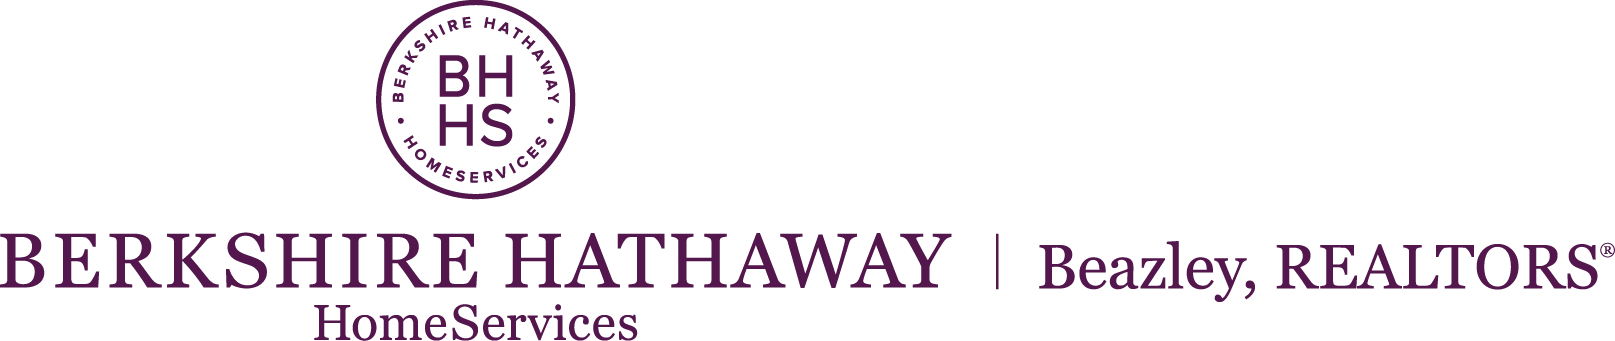 Beazley Logo - Berkshire Hathaway Home Services | Beazley Realtors